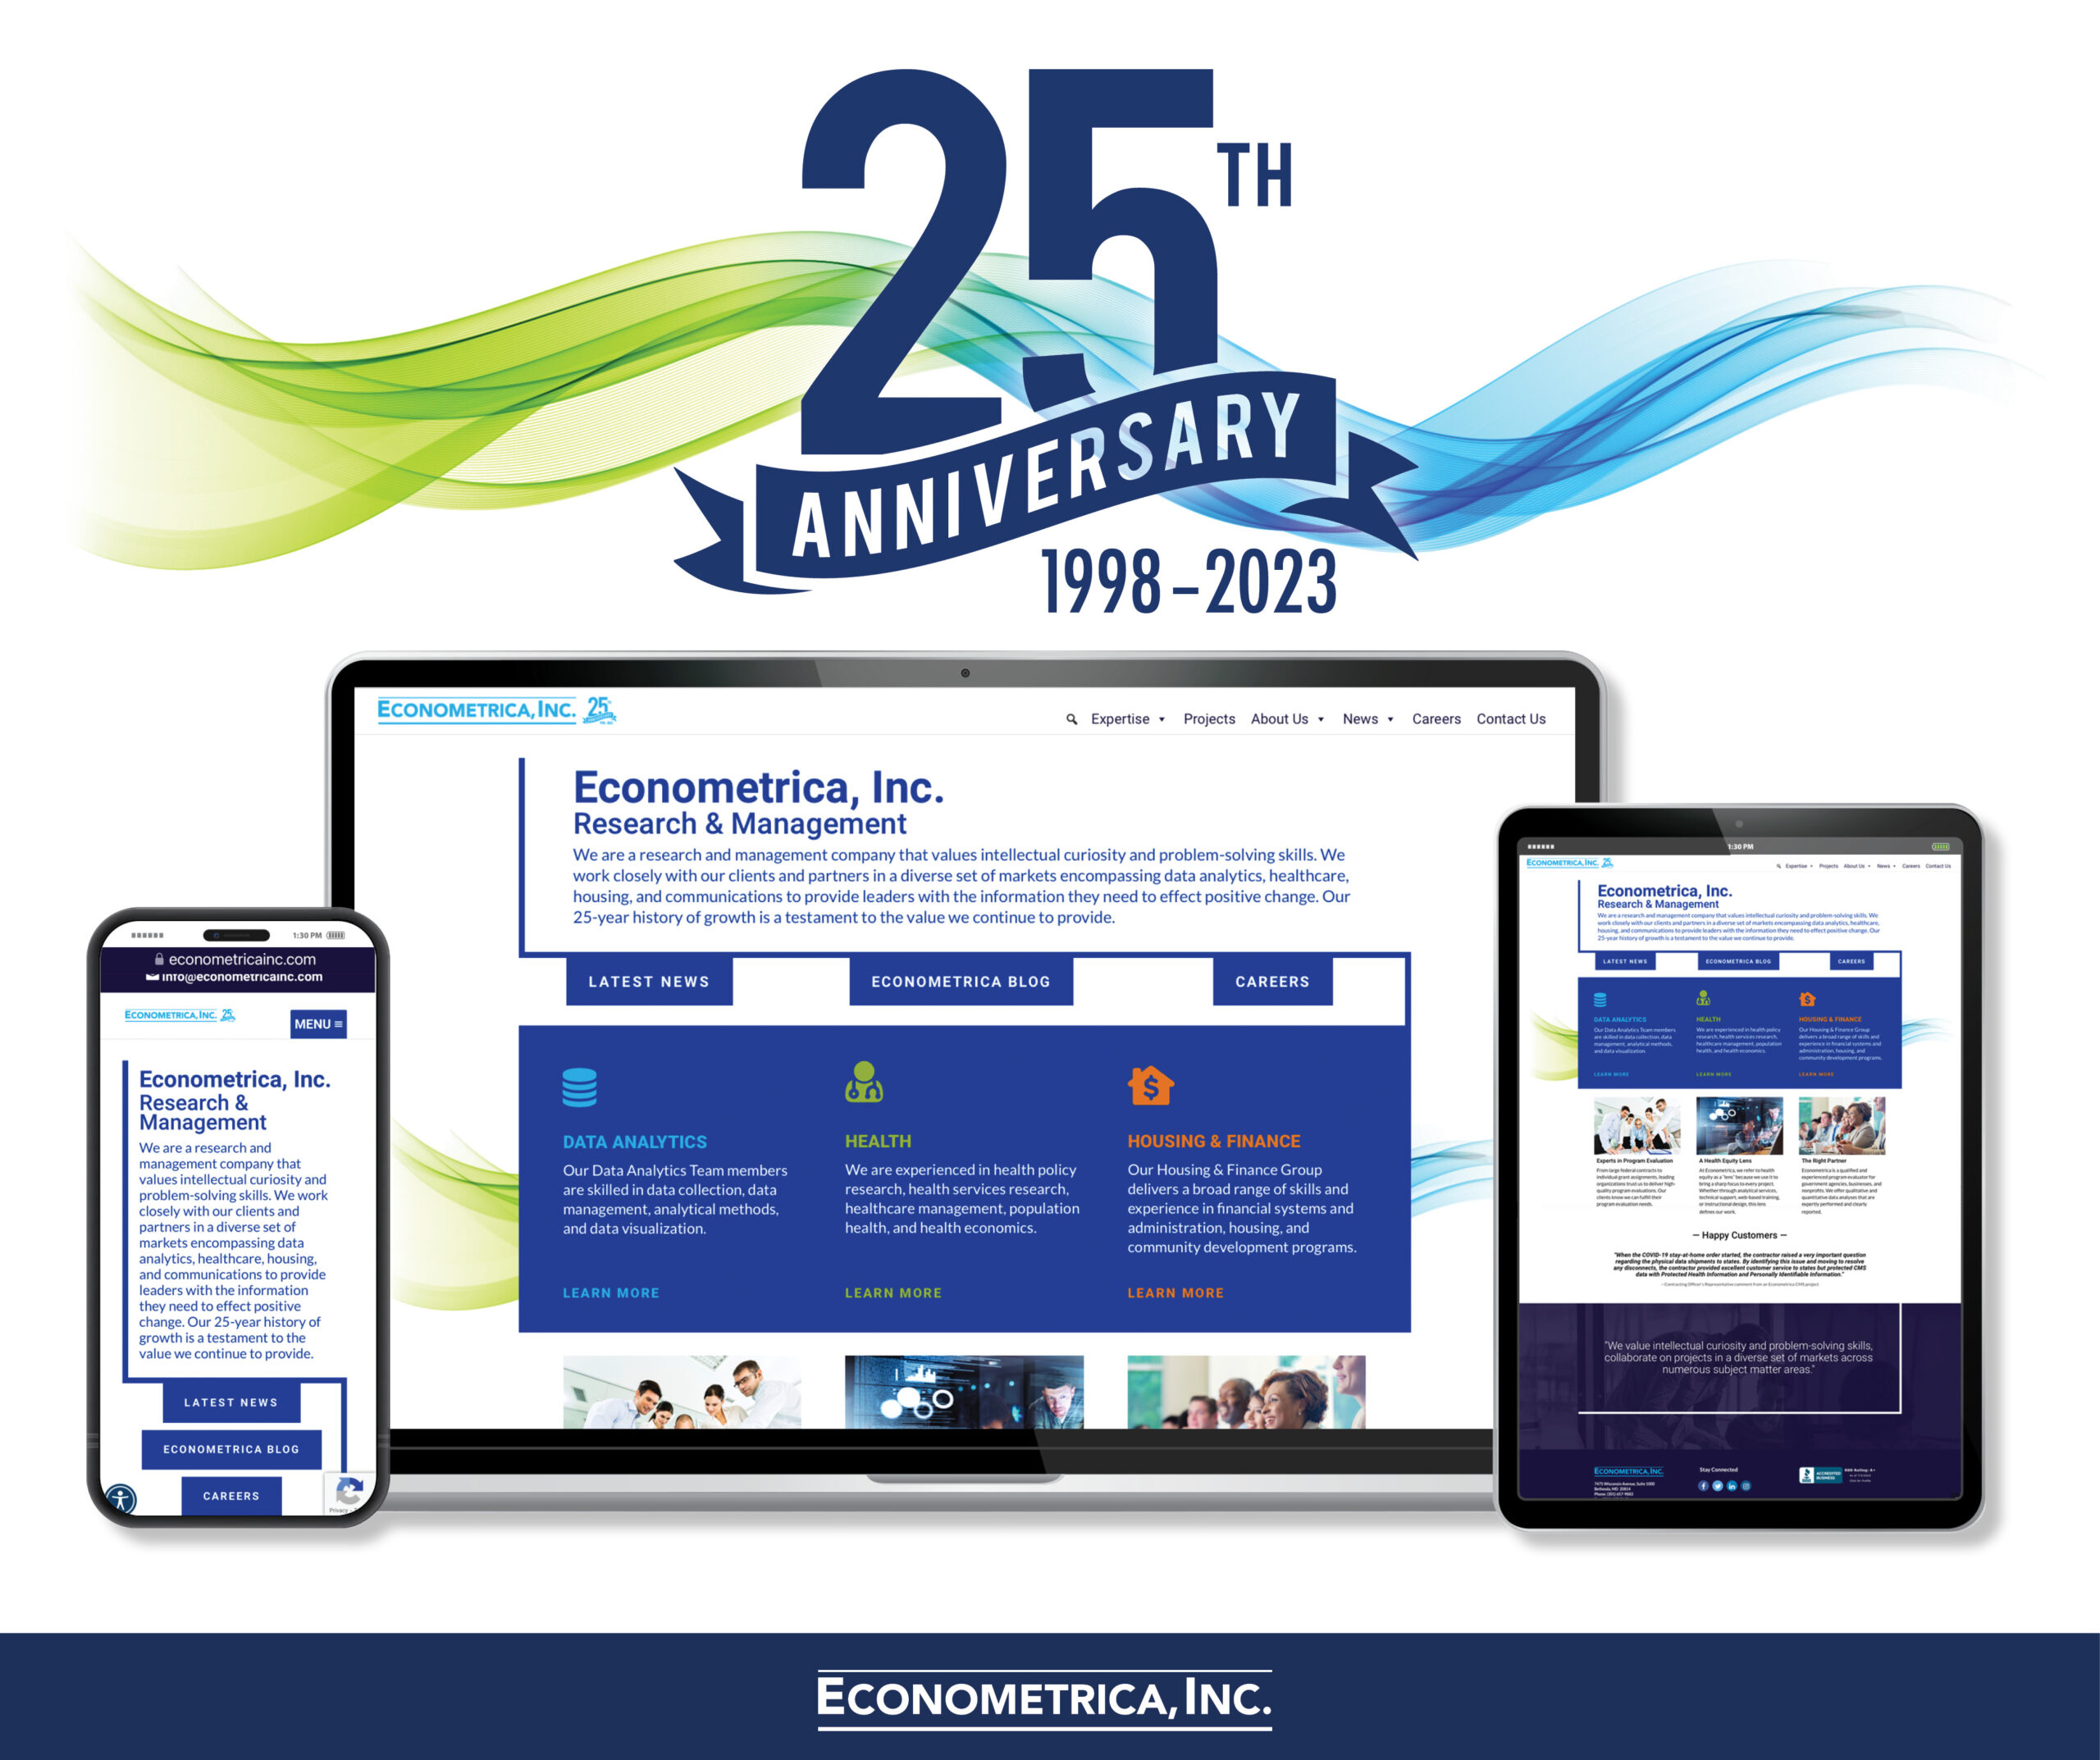 Econometrica's 25th Anniversary